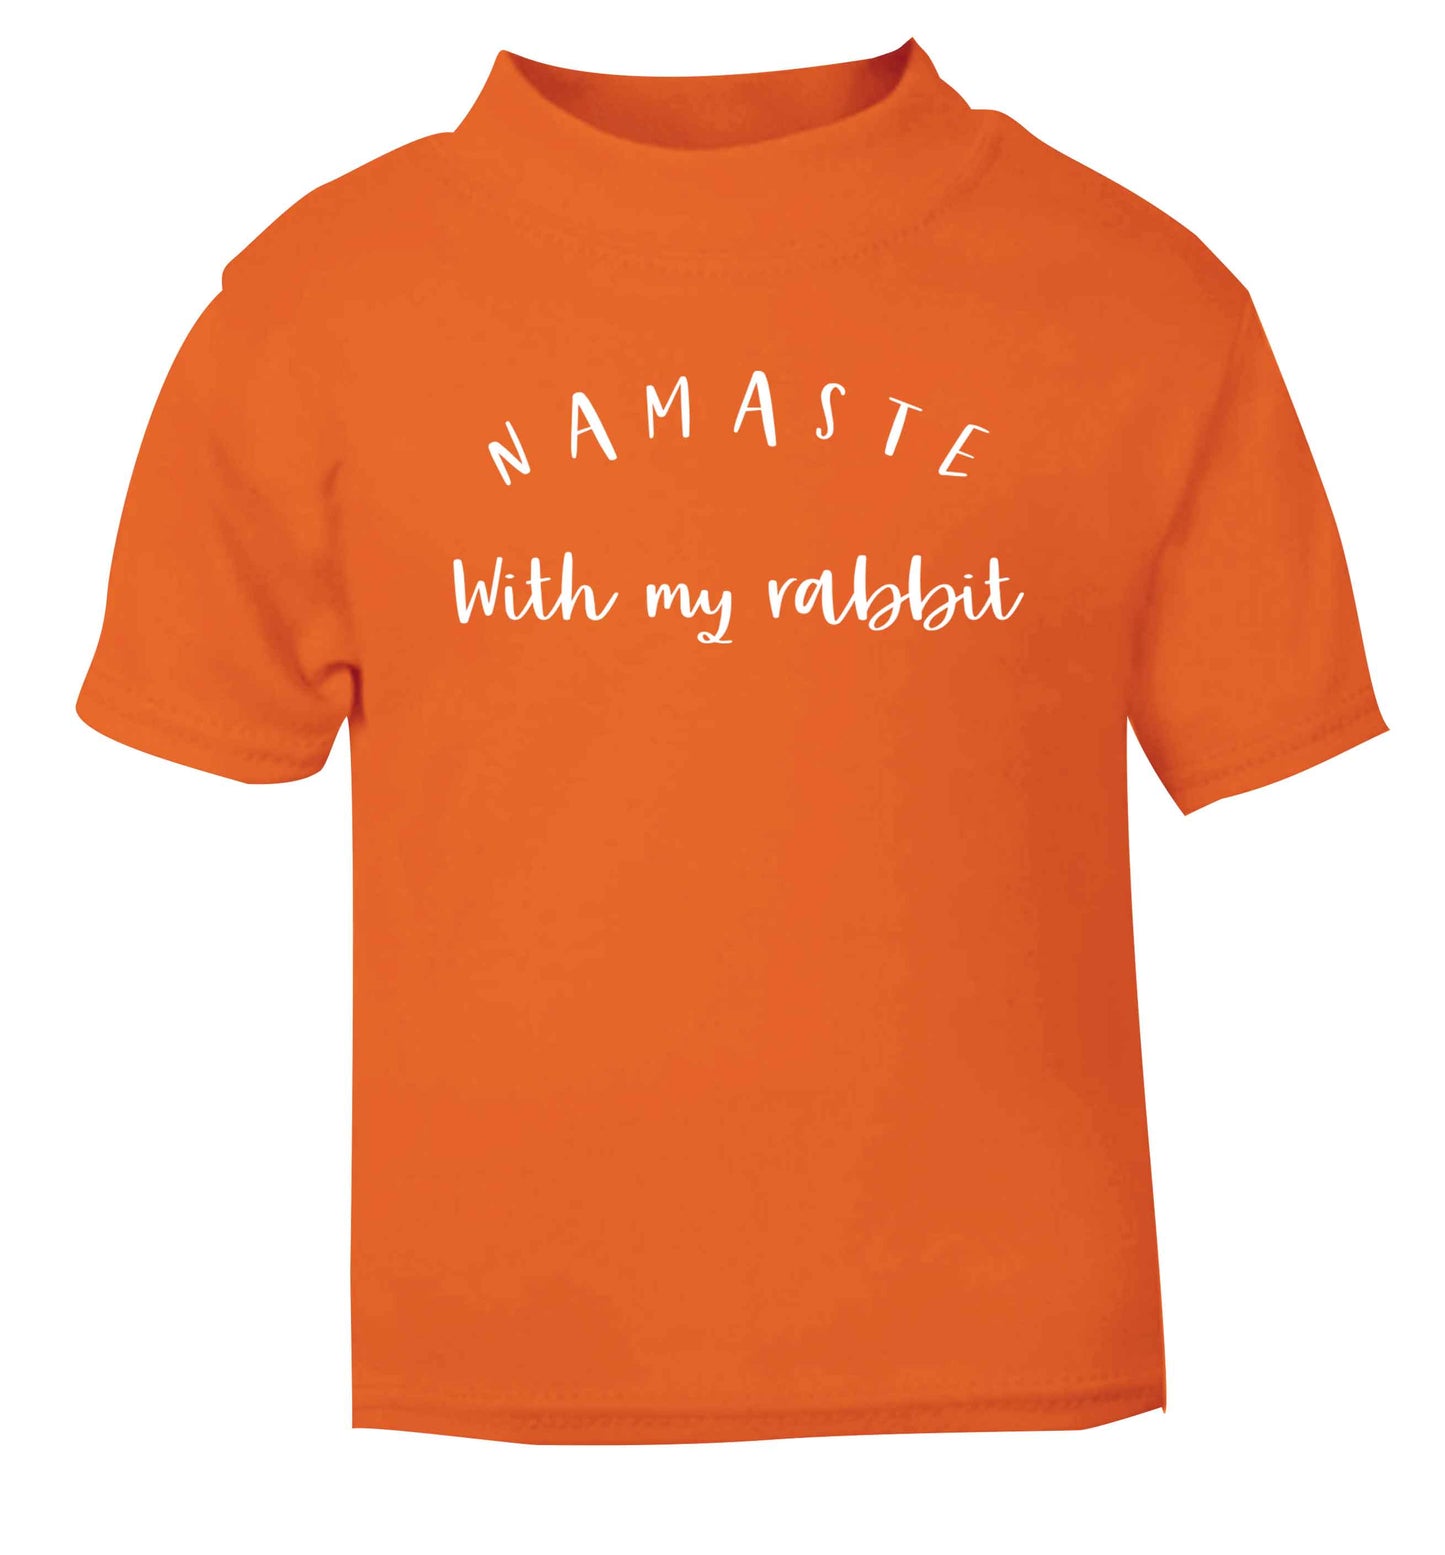 Namaste with my rabbit orange Baby Toddler Tshirt 2 Years